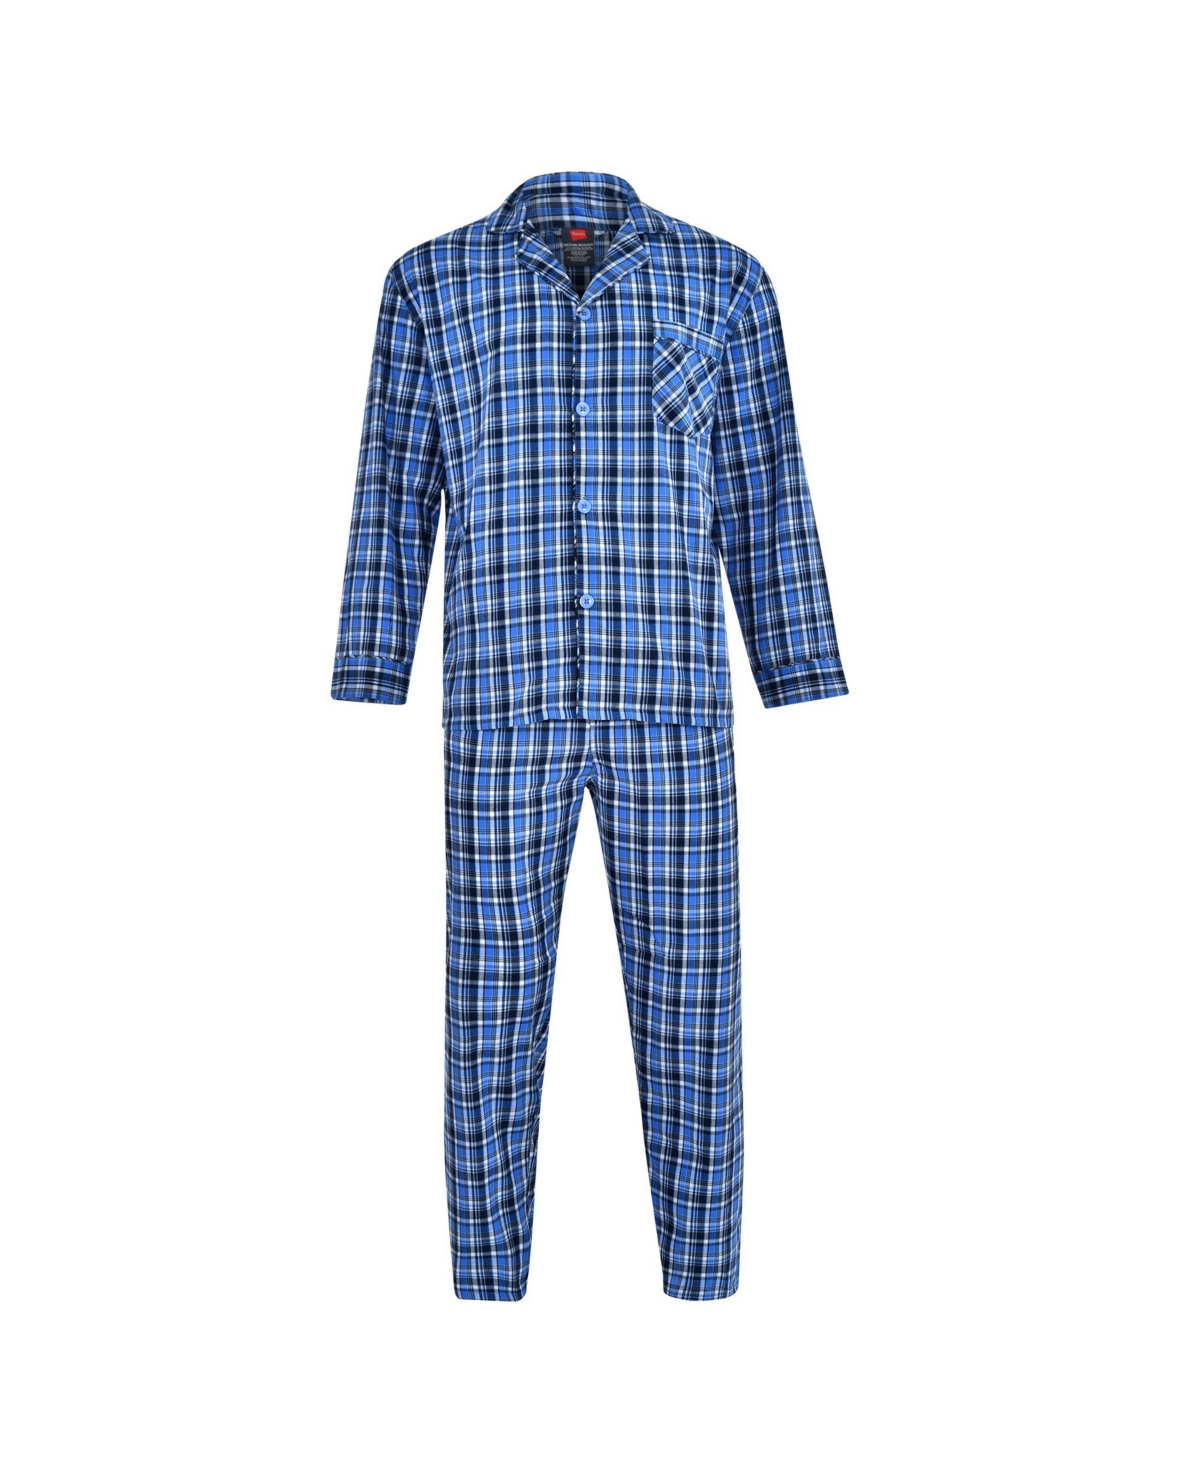 Hanes Men's Pajama Set - Red Plaid